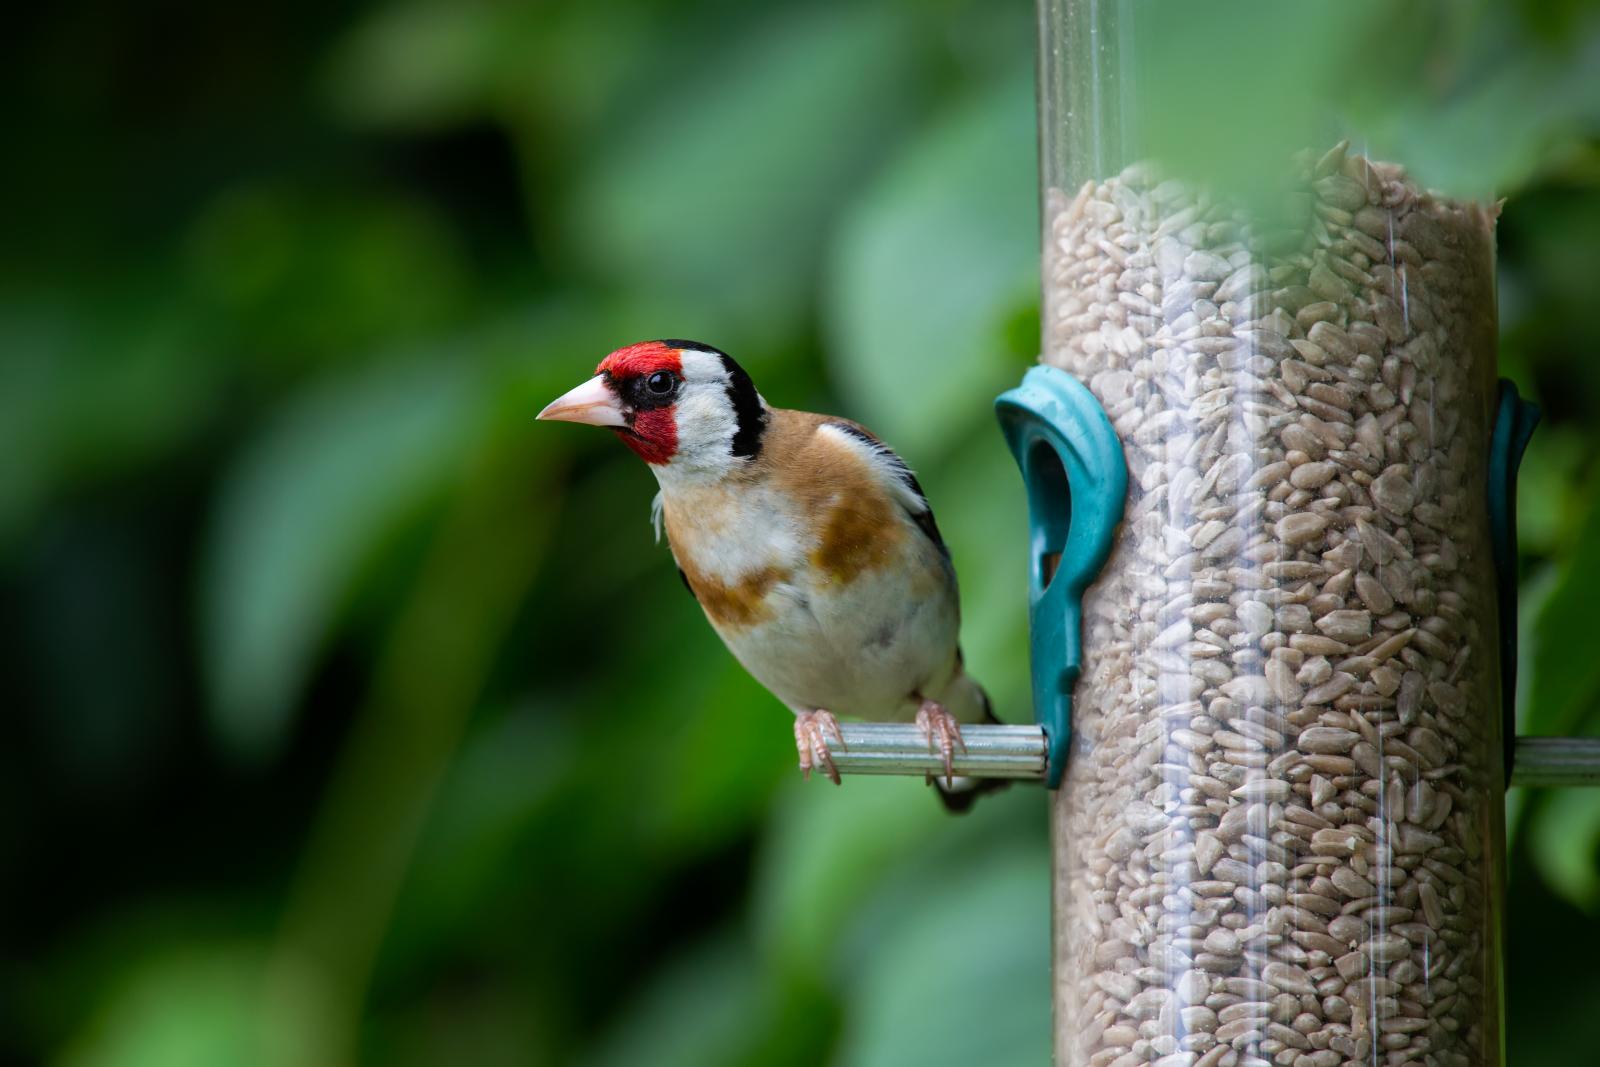 A goldfinch on a feeder in the garden